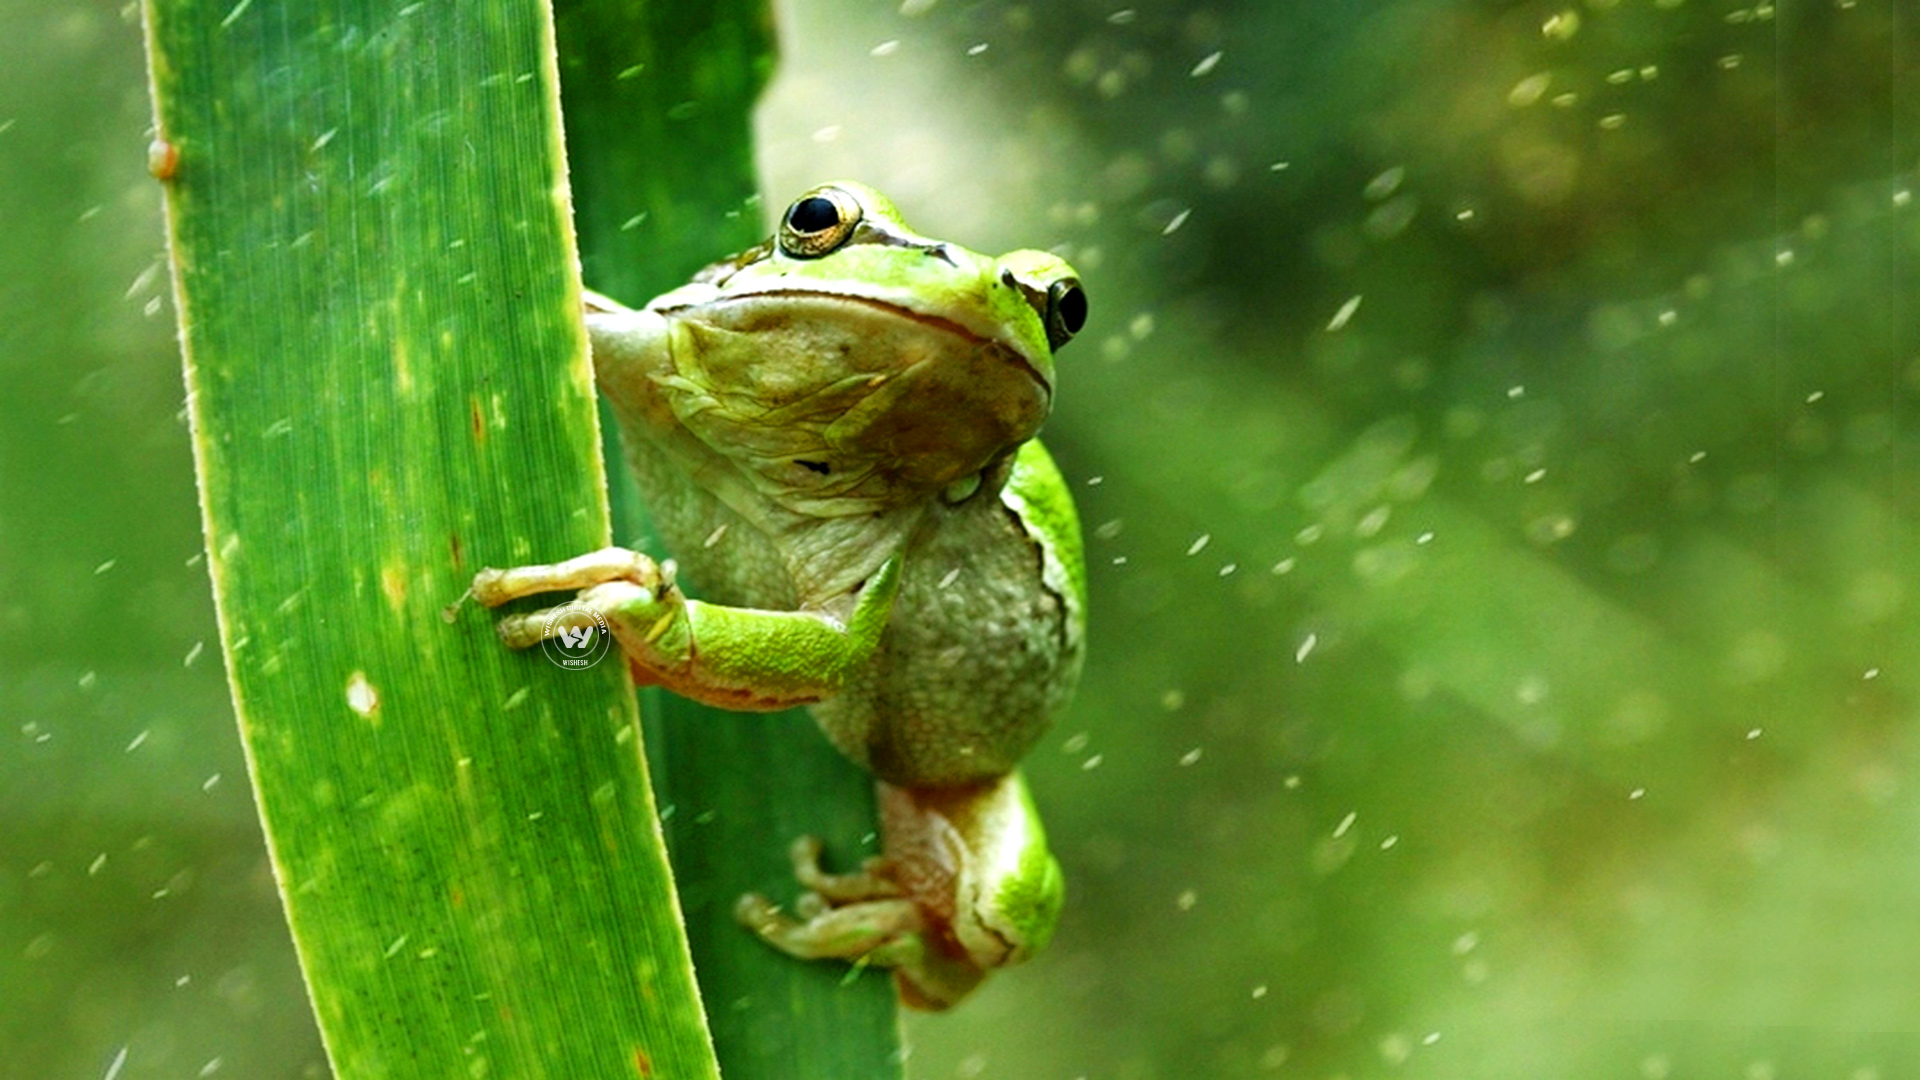 Wallpaper 2of 5 | Frog in the rain wallpapers | Frog in the rain | rain